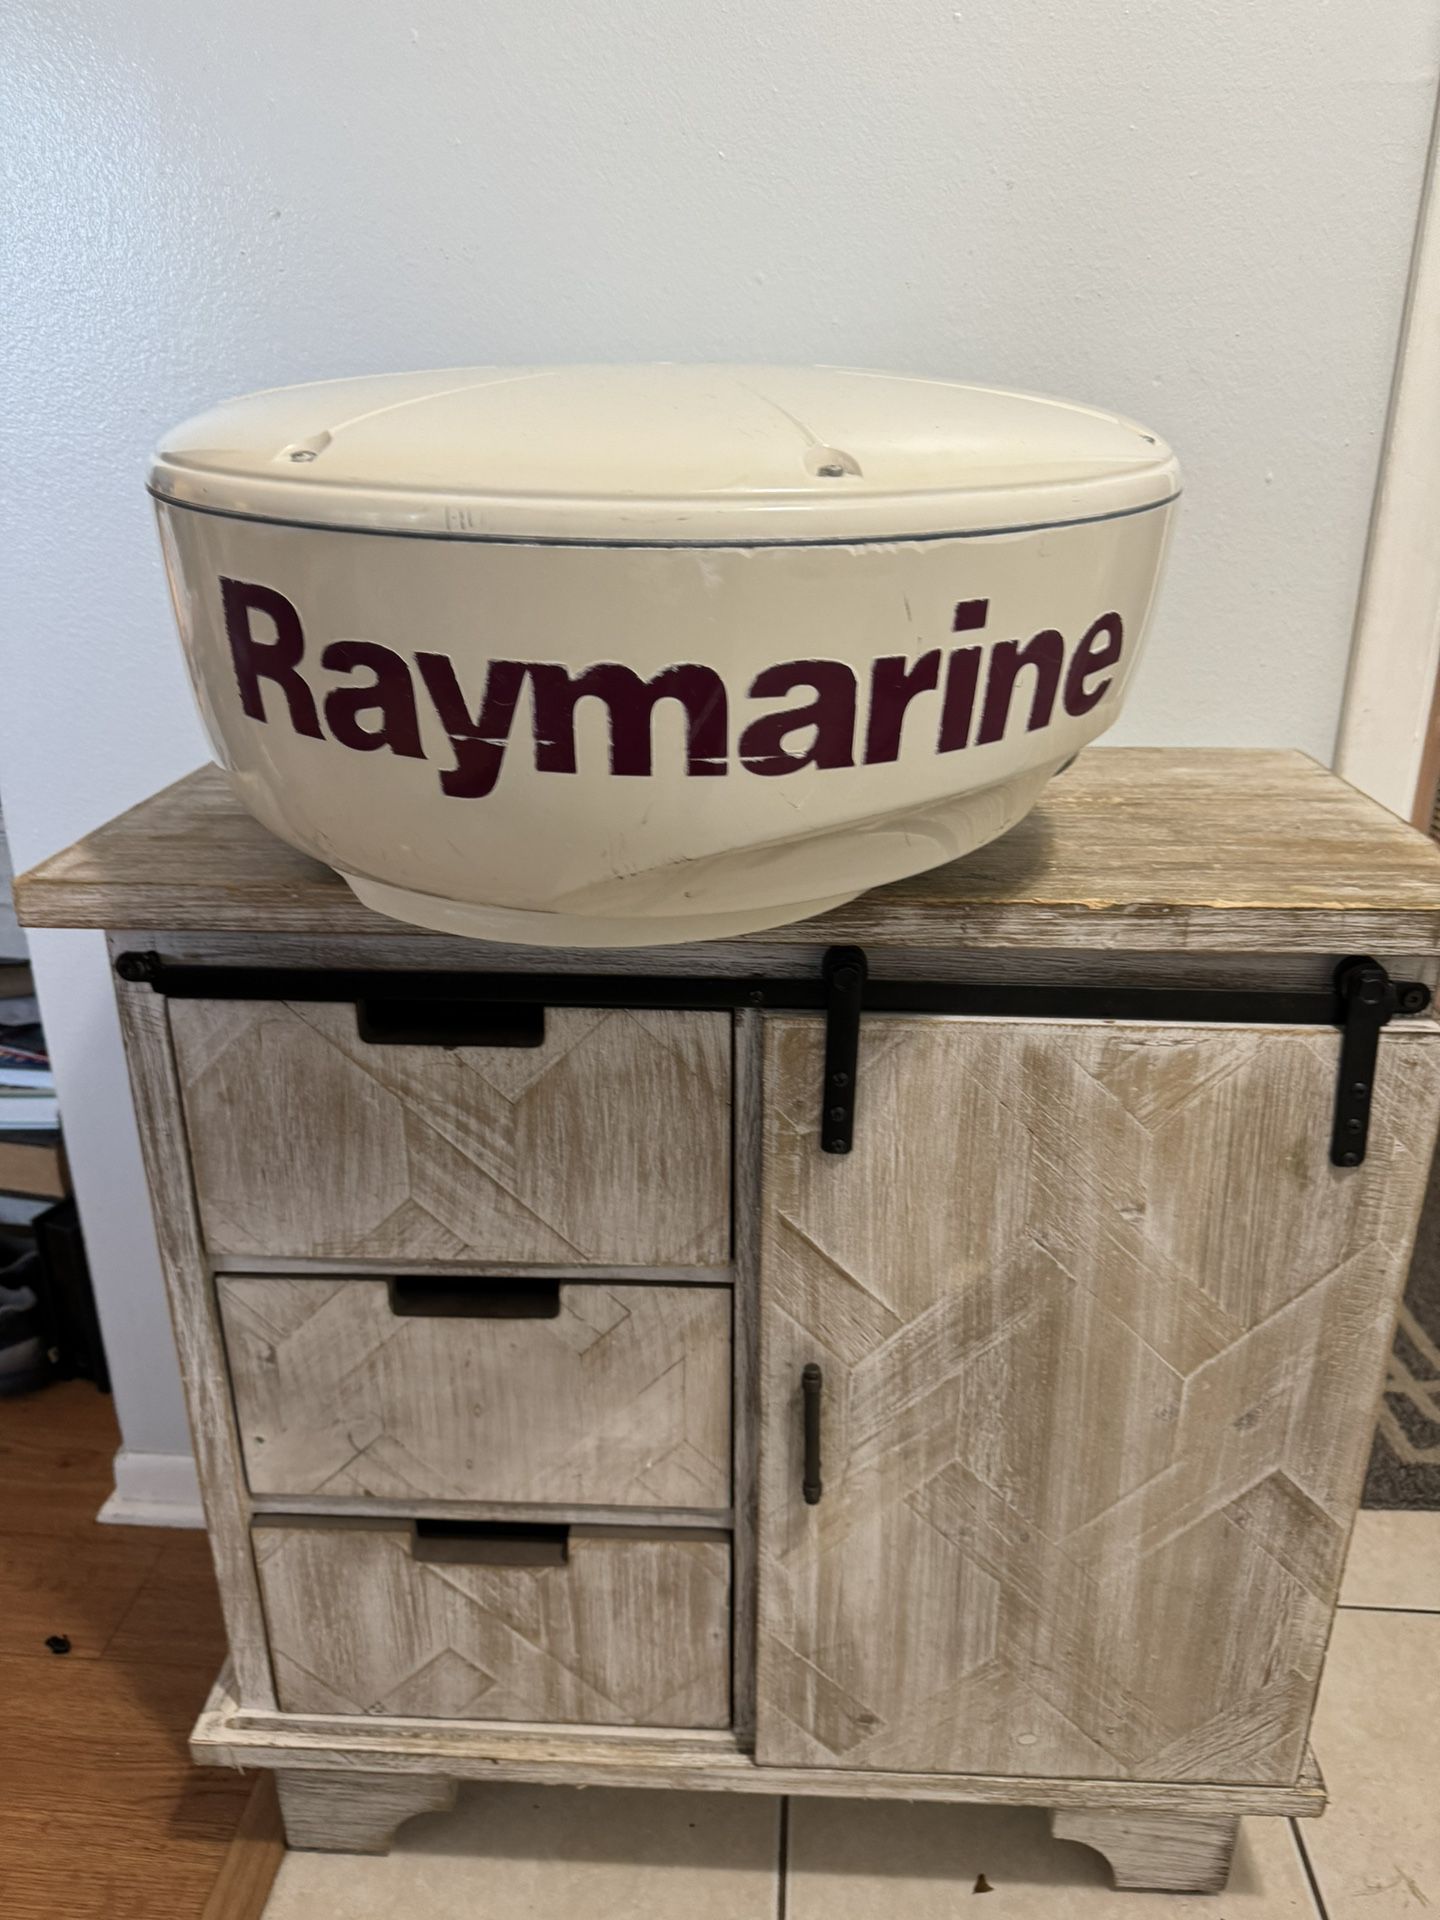 Raymarine Rd218 Radome Raymarine RD218 2kW 18" Radome Analog Radar Scanner Dome Marine Boat - No Cable